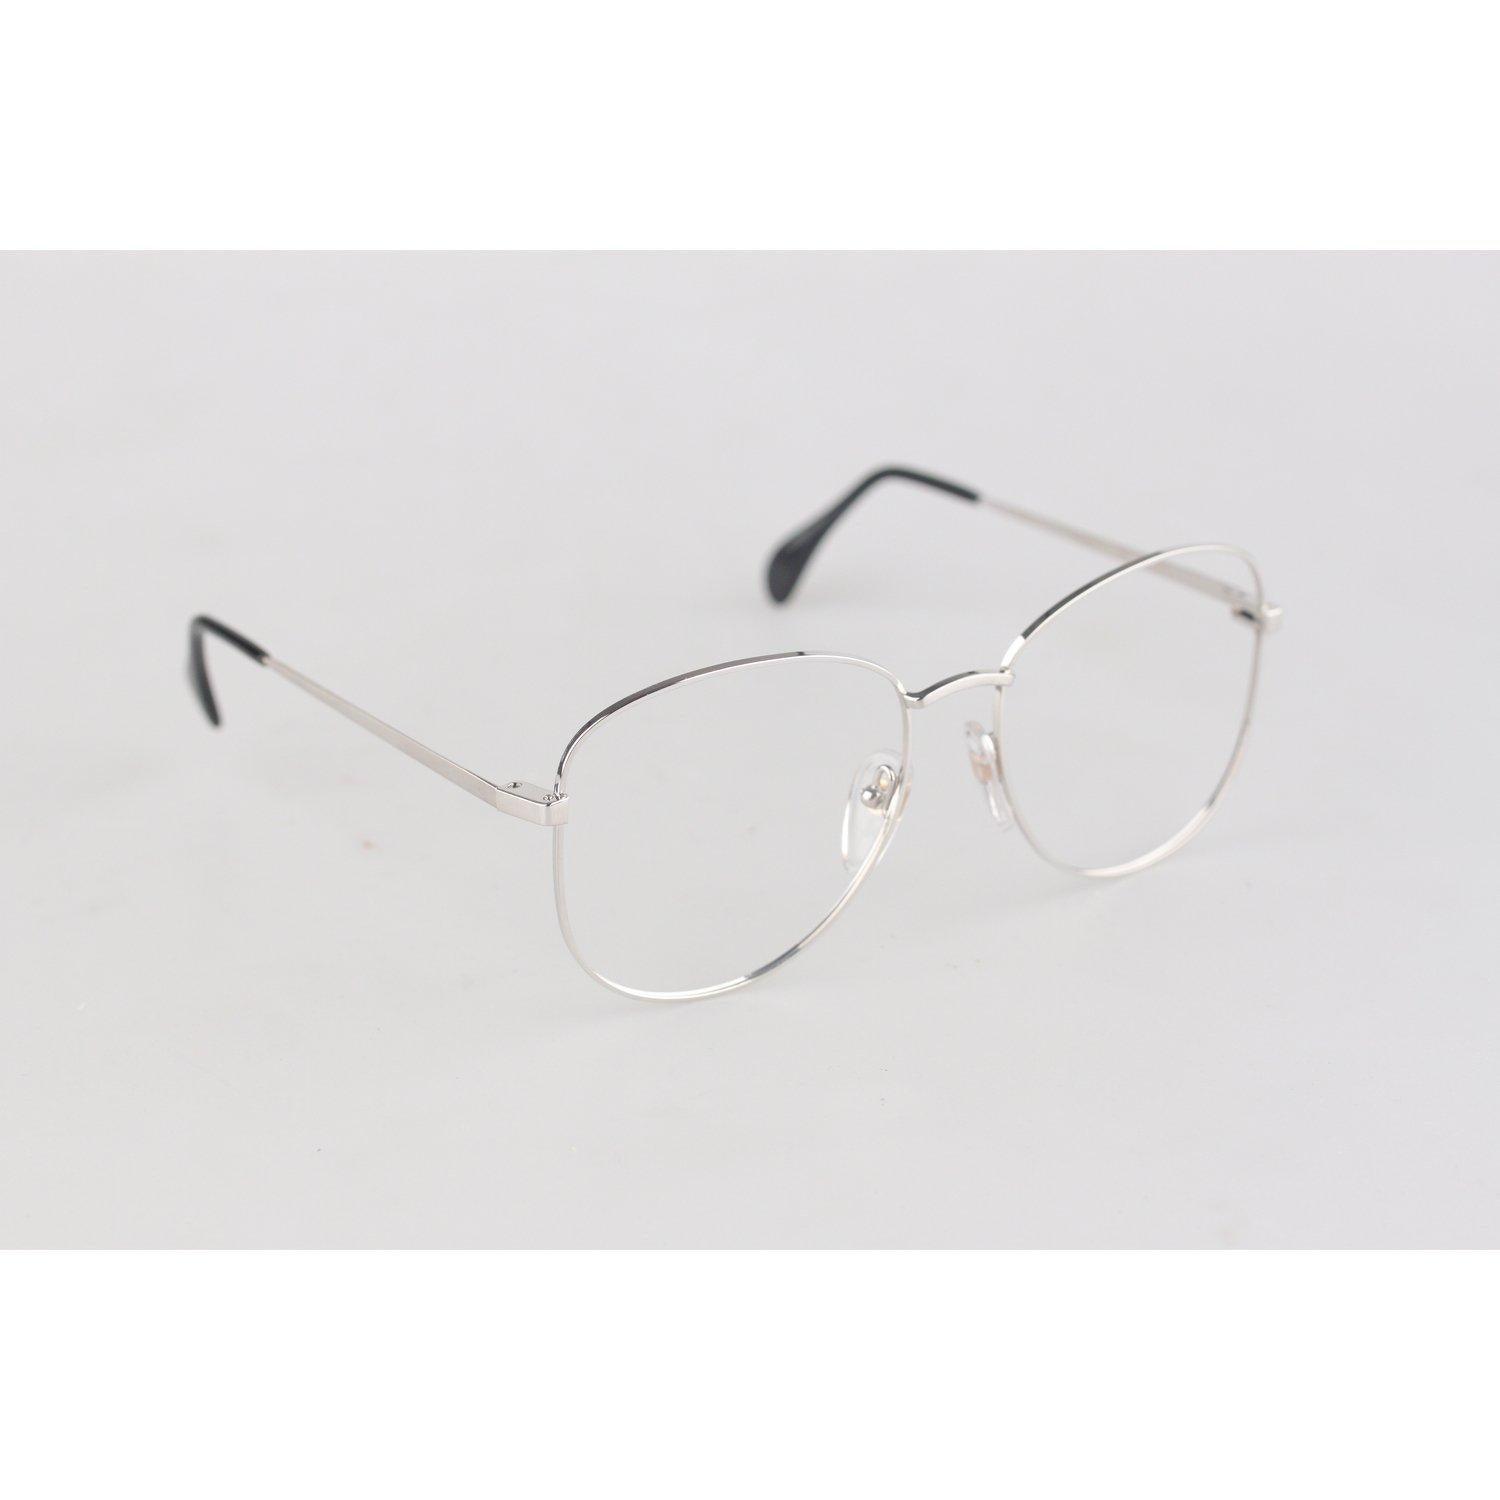 Vogue D'Or by Bausch & Lomb 10K GF White Gold Mint Eyeglasses Mod 512 3